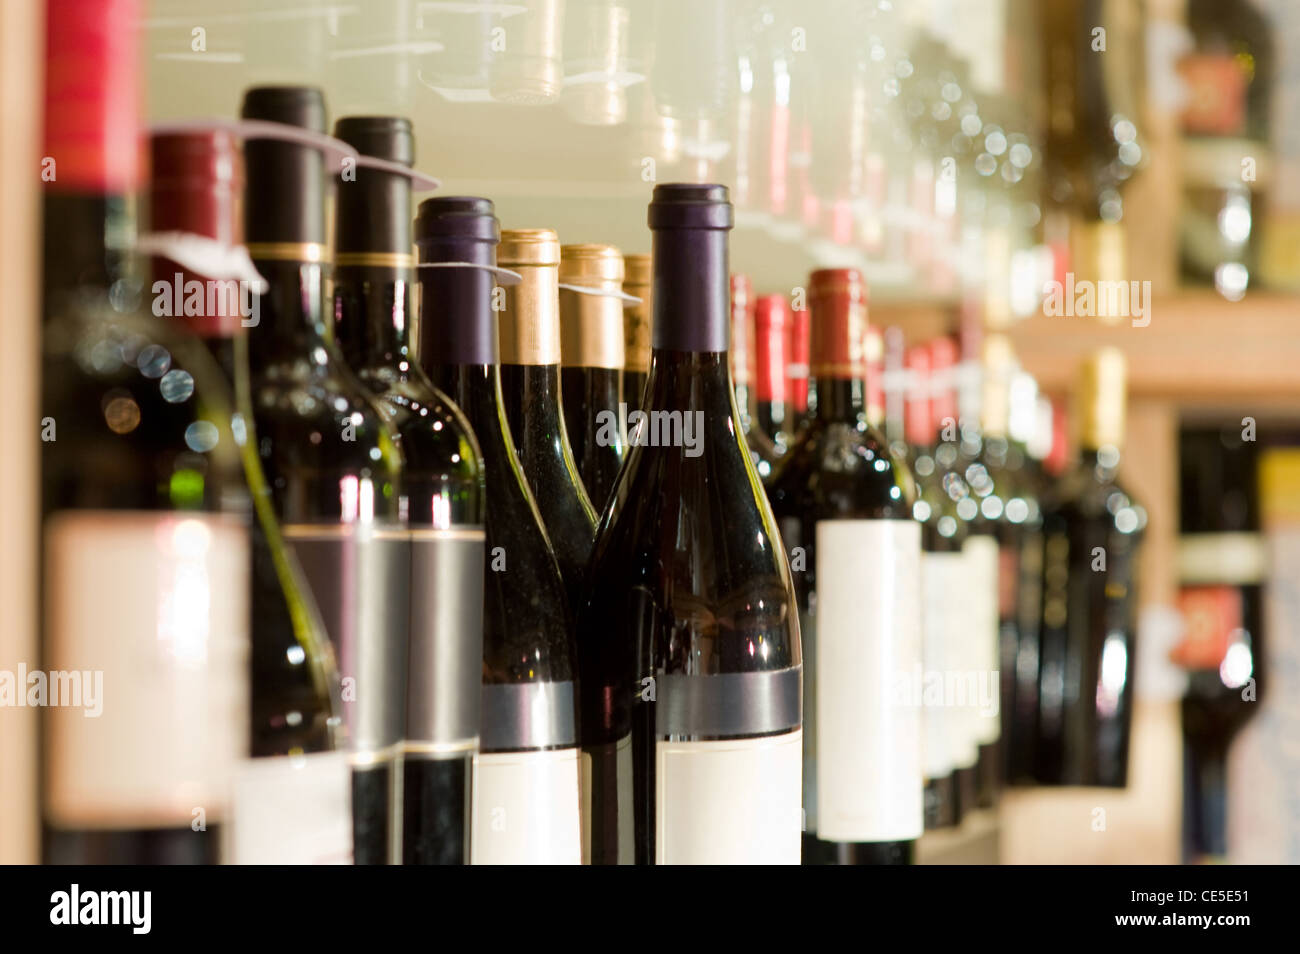 A selection of wine bottles on a shelf Stock Photo